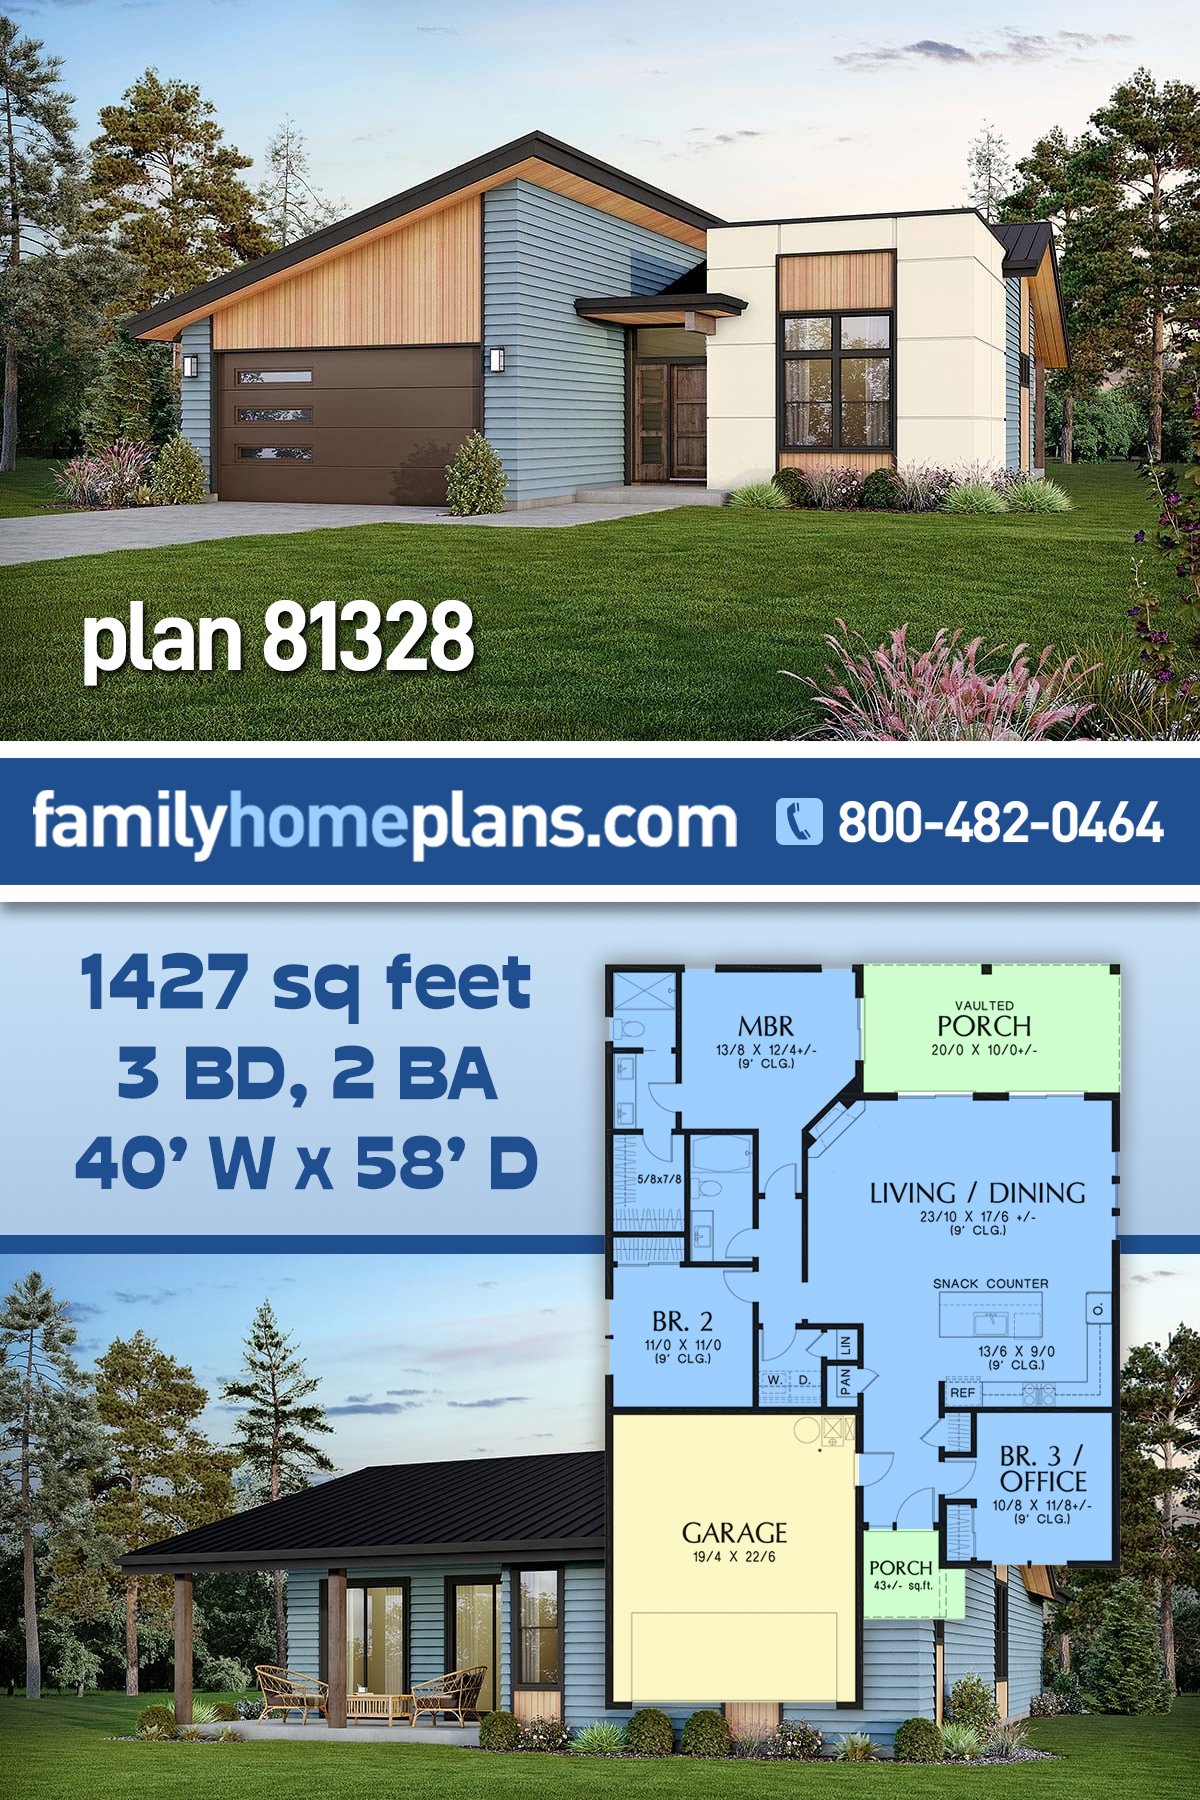 House Plan 81328